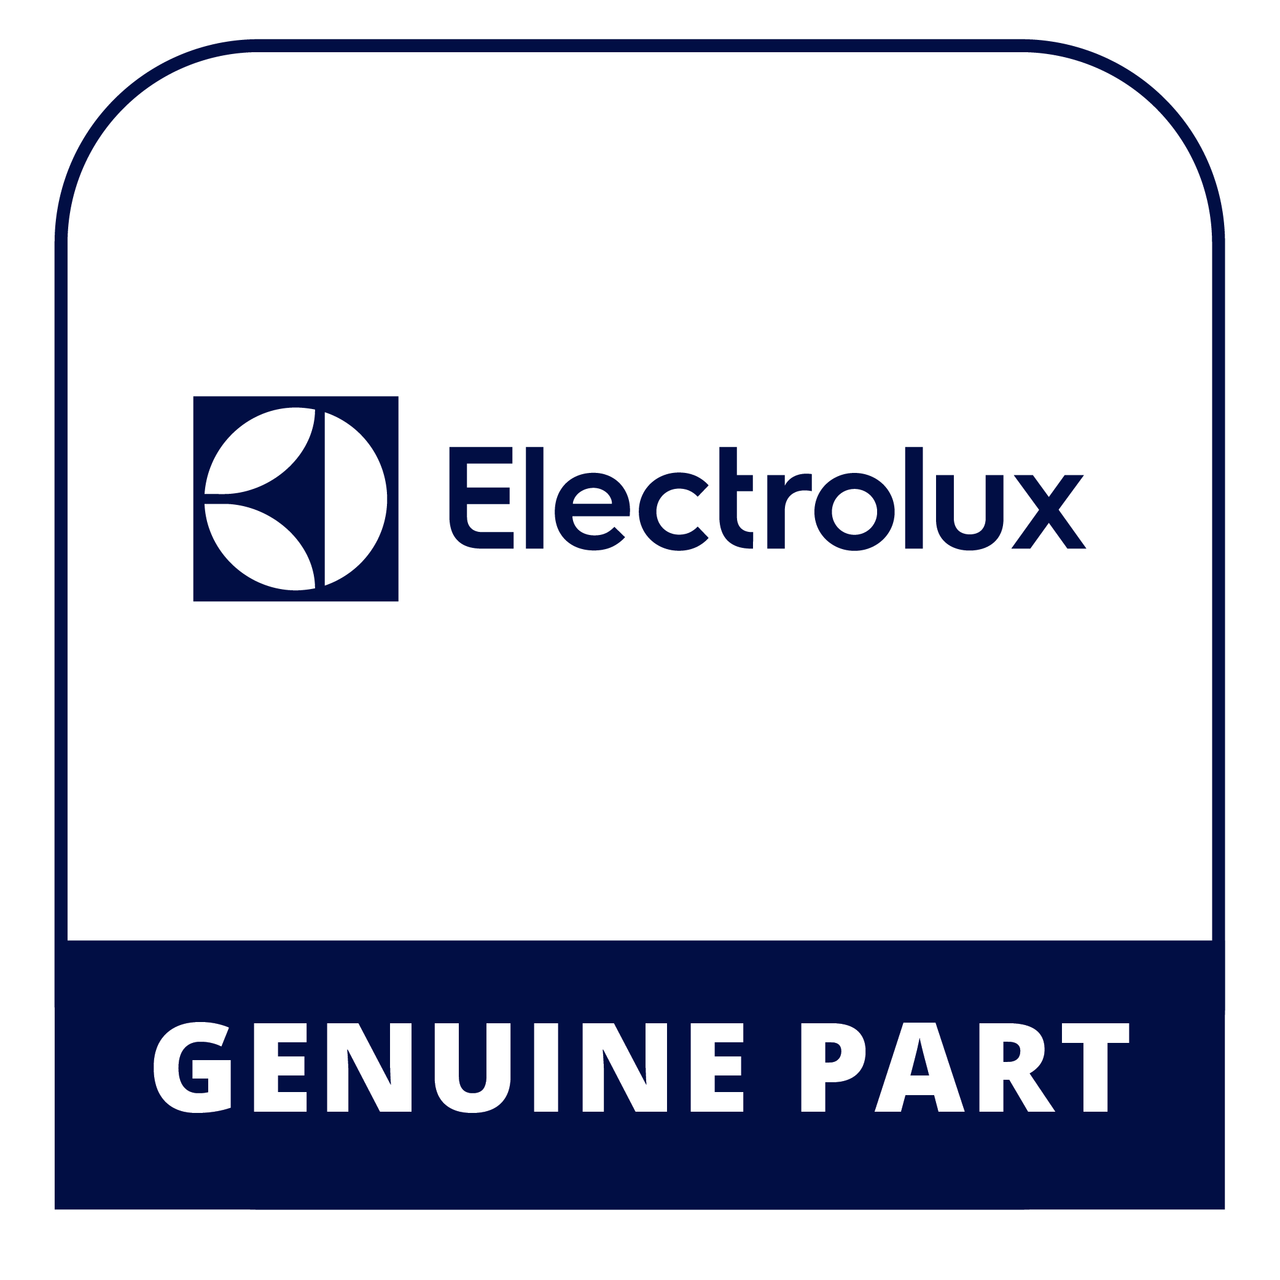 Frigidaire - Electrolux 5304504976 - Cover - Genuine Electrolux Part